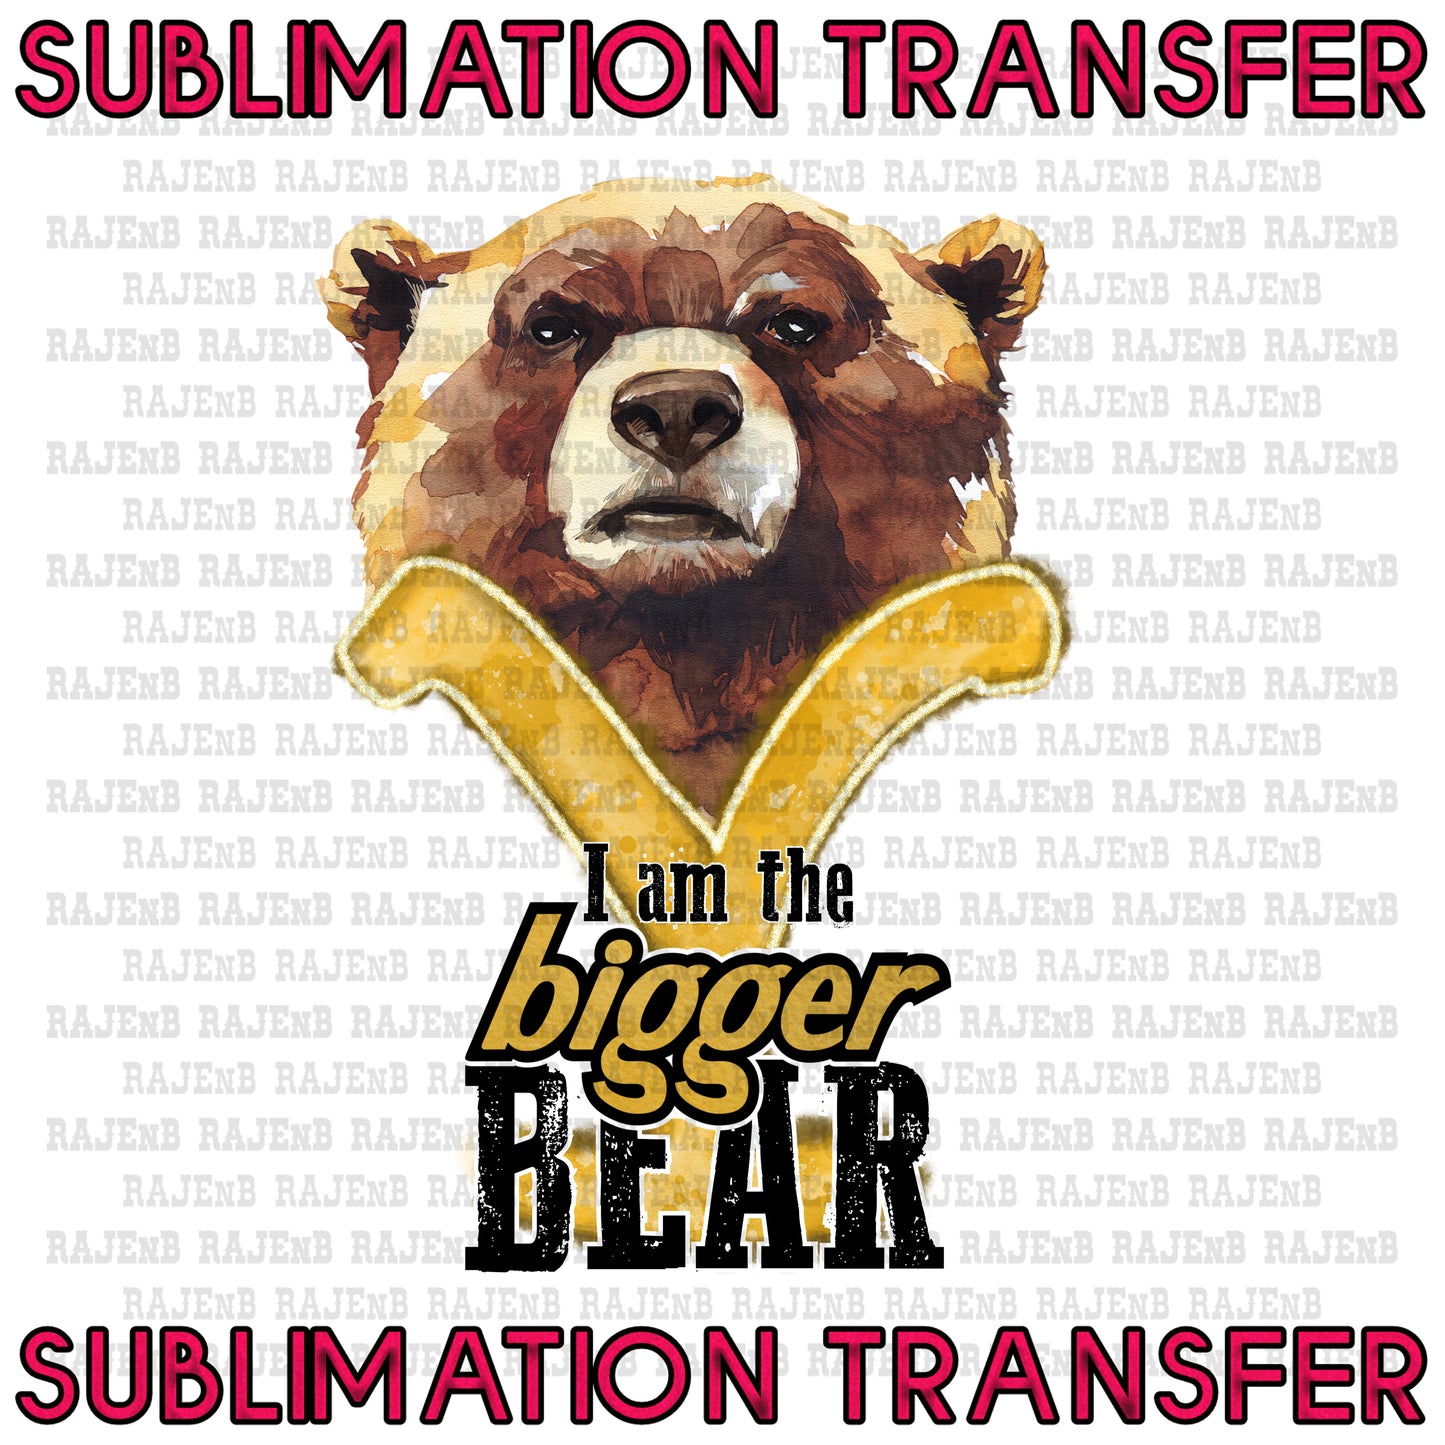 I'm the Bigger Bear Beth - SUBLIMATION TRANSFER 4019SUB